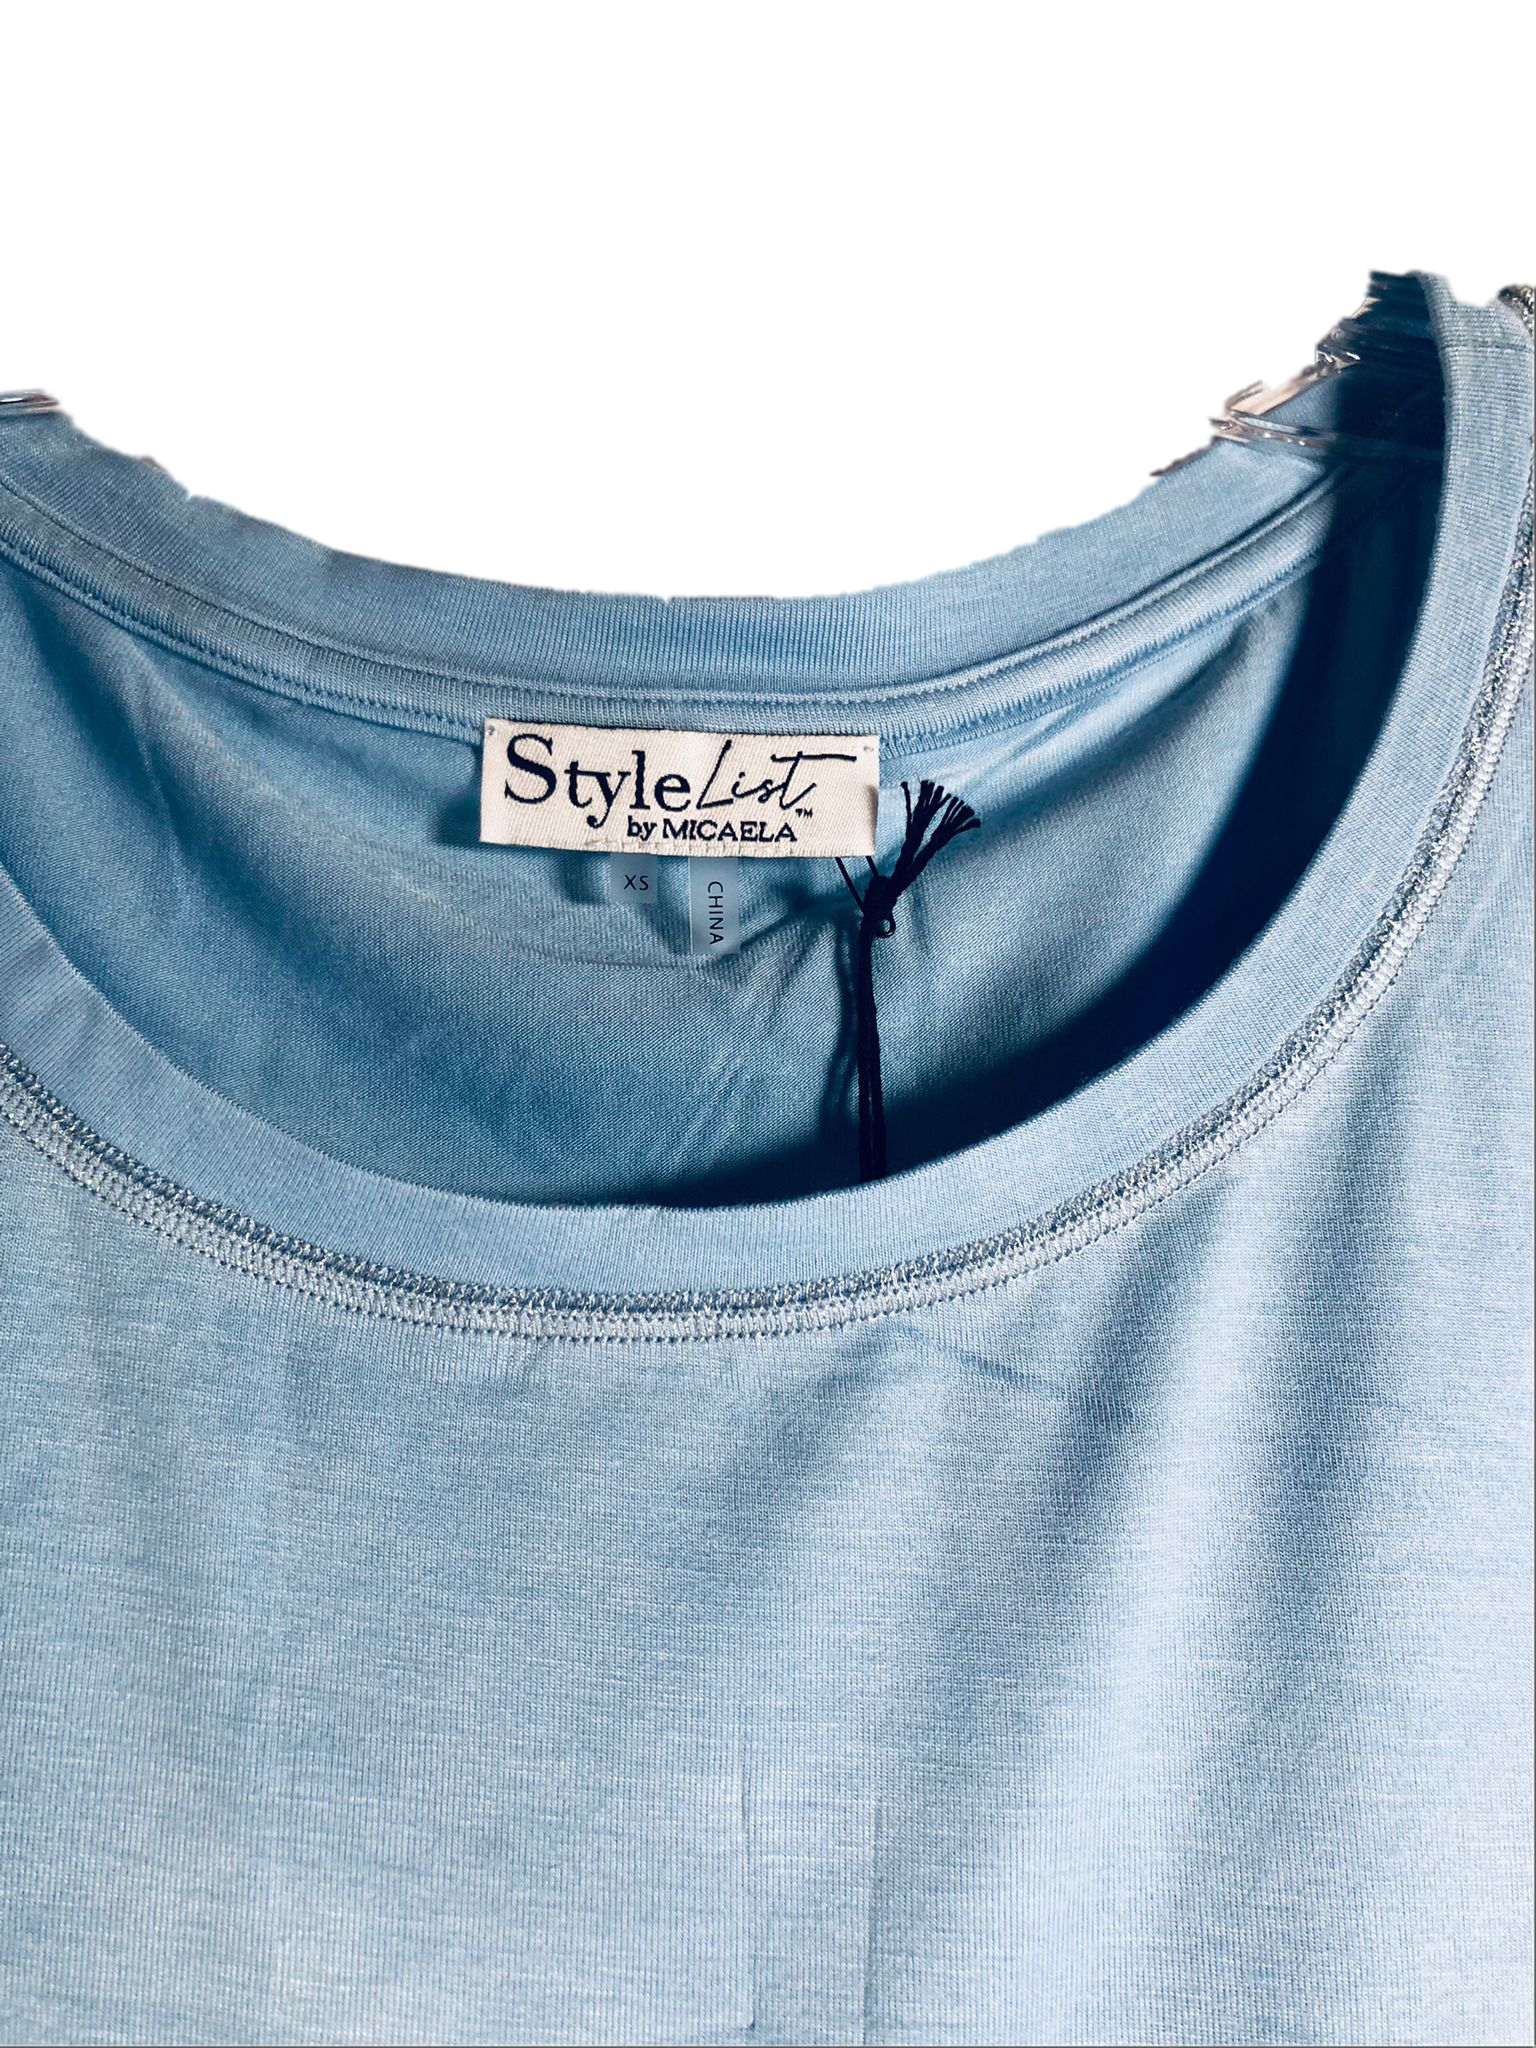 StyleList by Micaela Metallic Stitch Tee Shirt